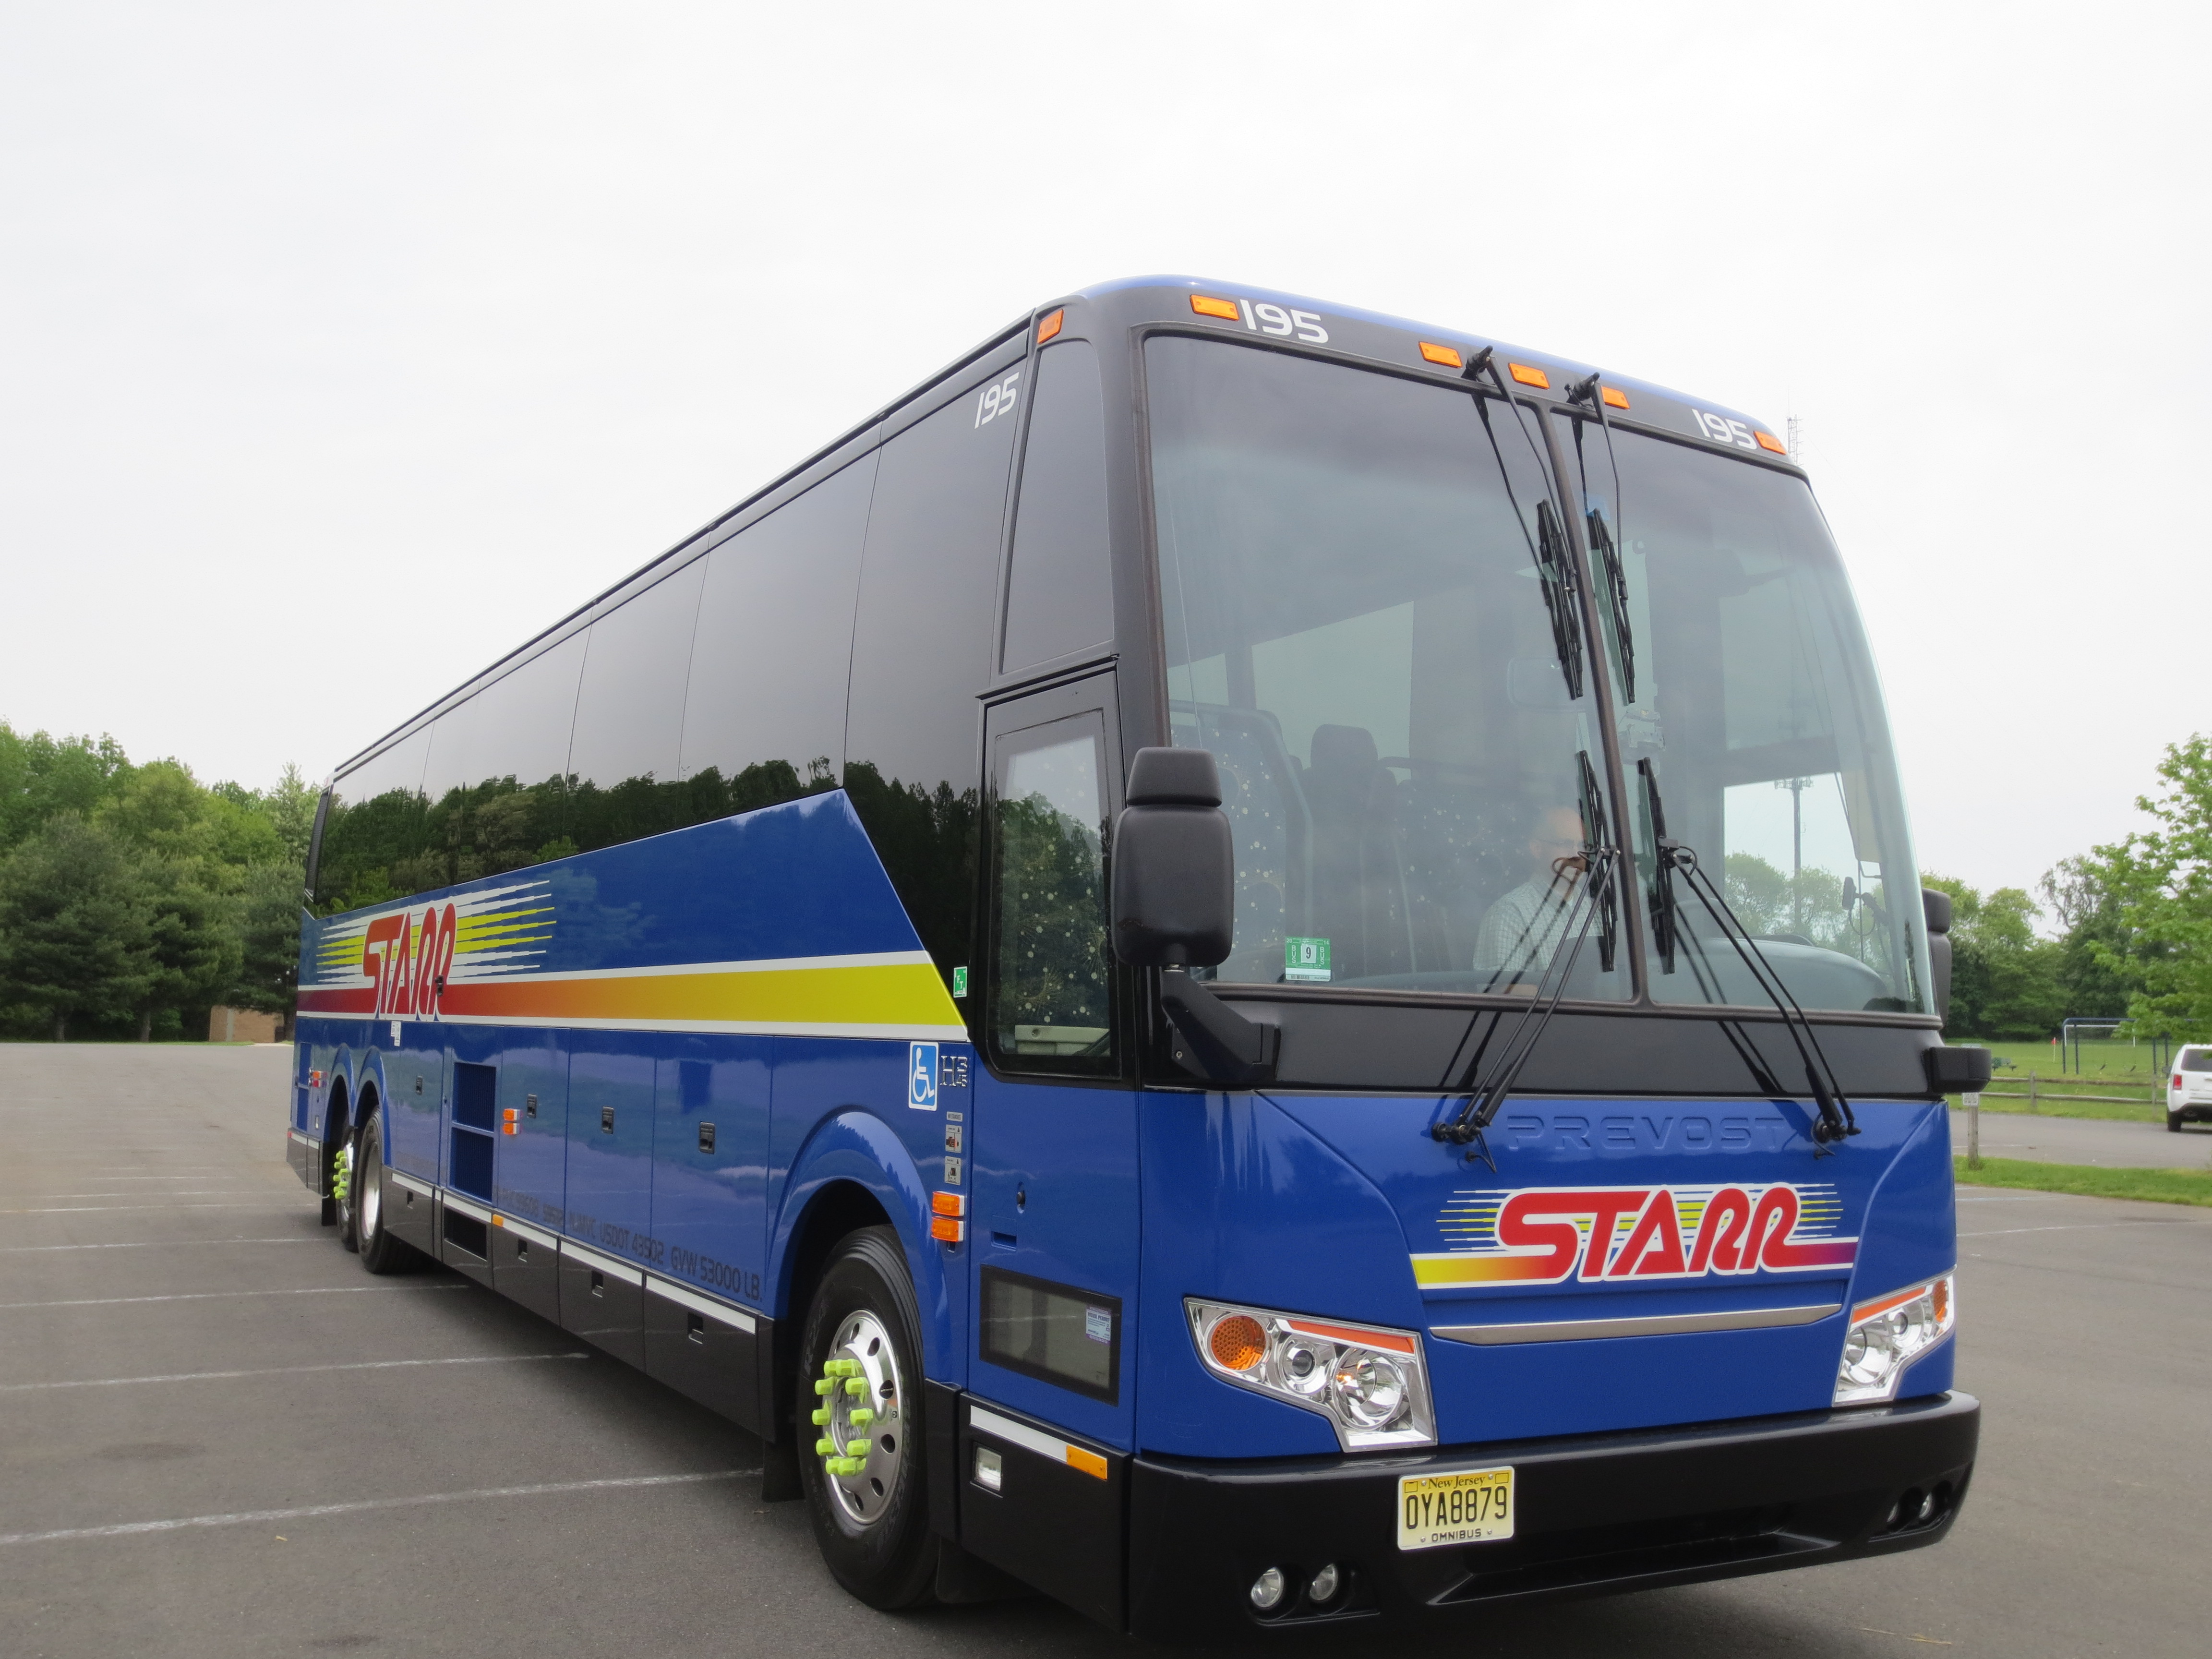 all tour transportation bus